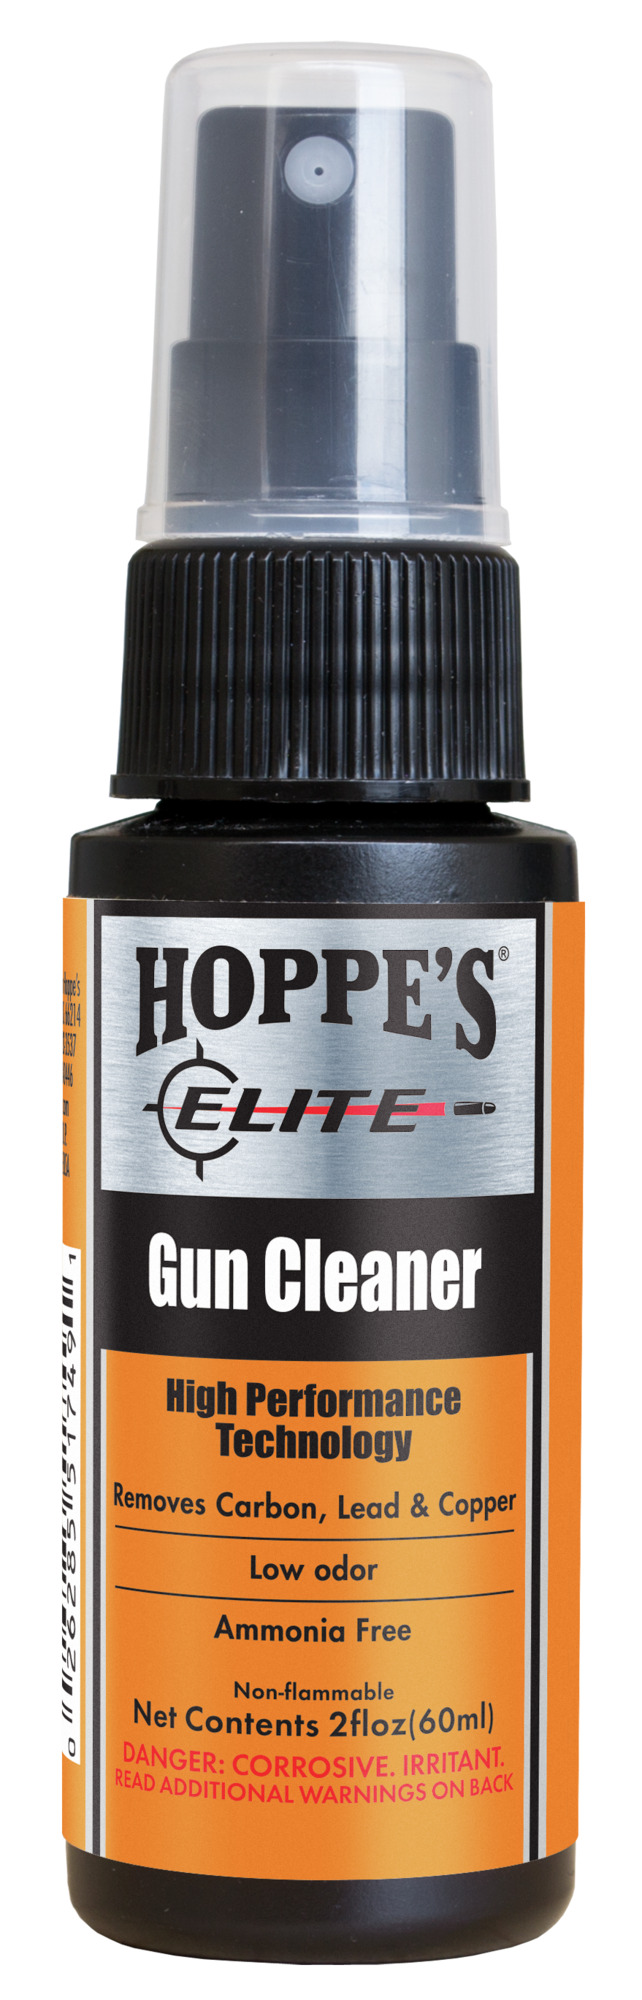 How to Use Hoppes Elite Gun Cleaner